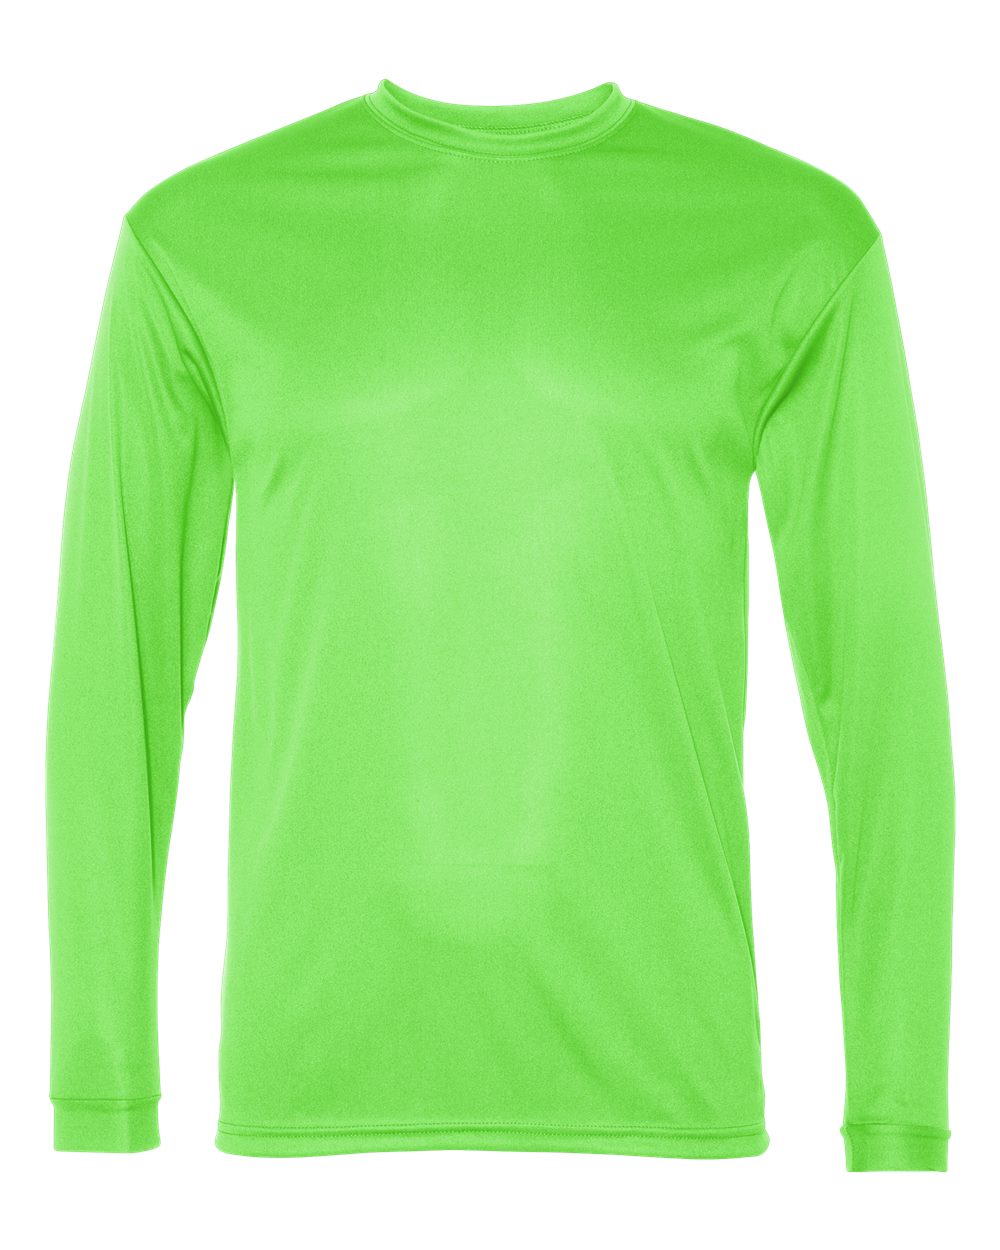 C2 Sport - Performance Long Sleeve T-Shirt - 5104, Dri Fit